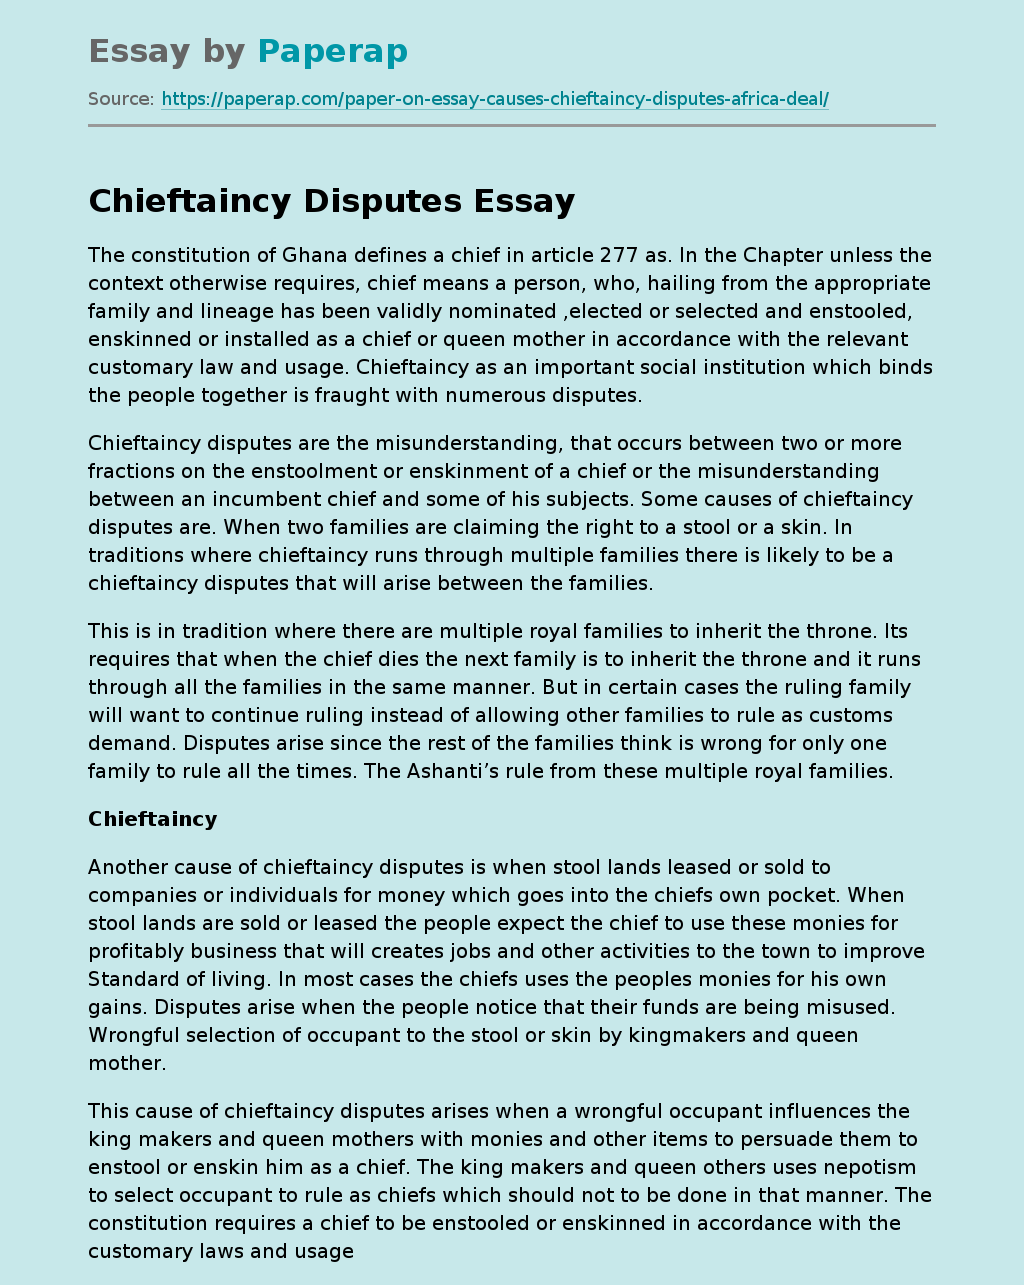 Chieftaincy Disputes